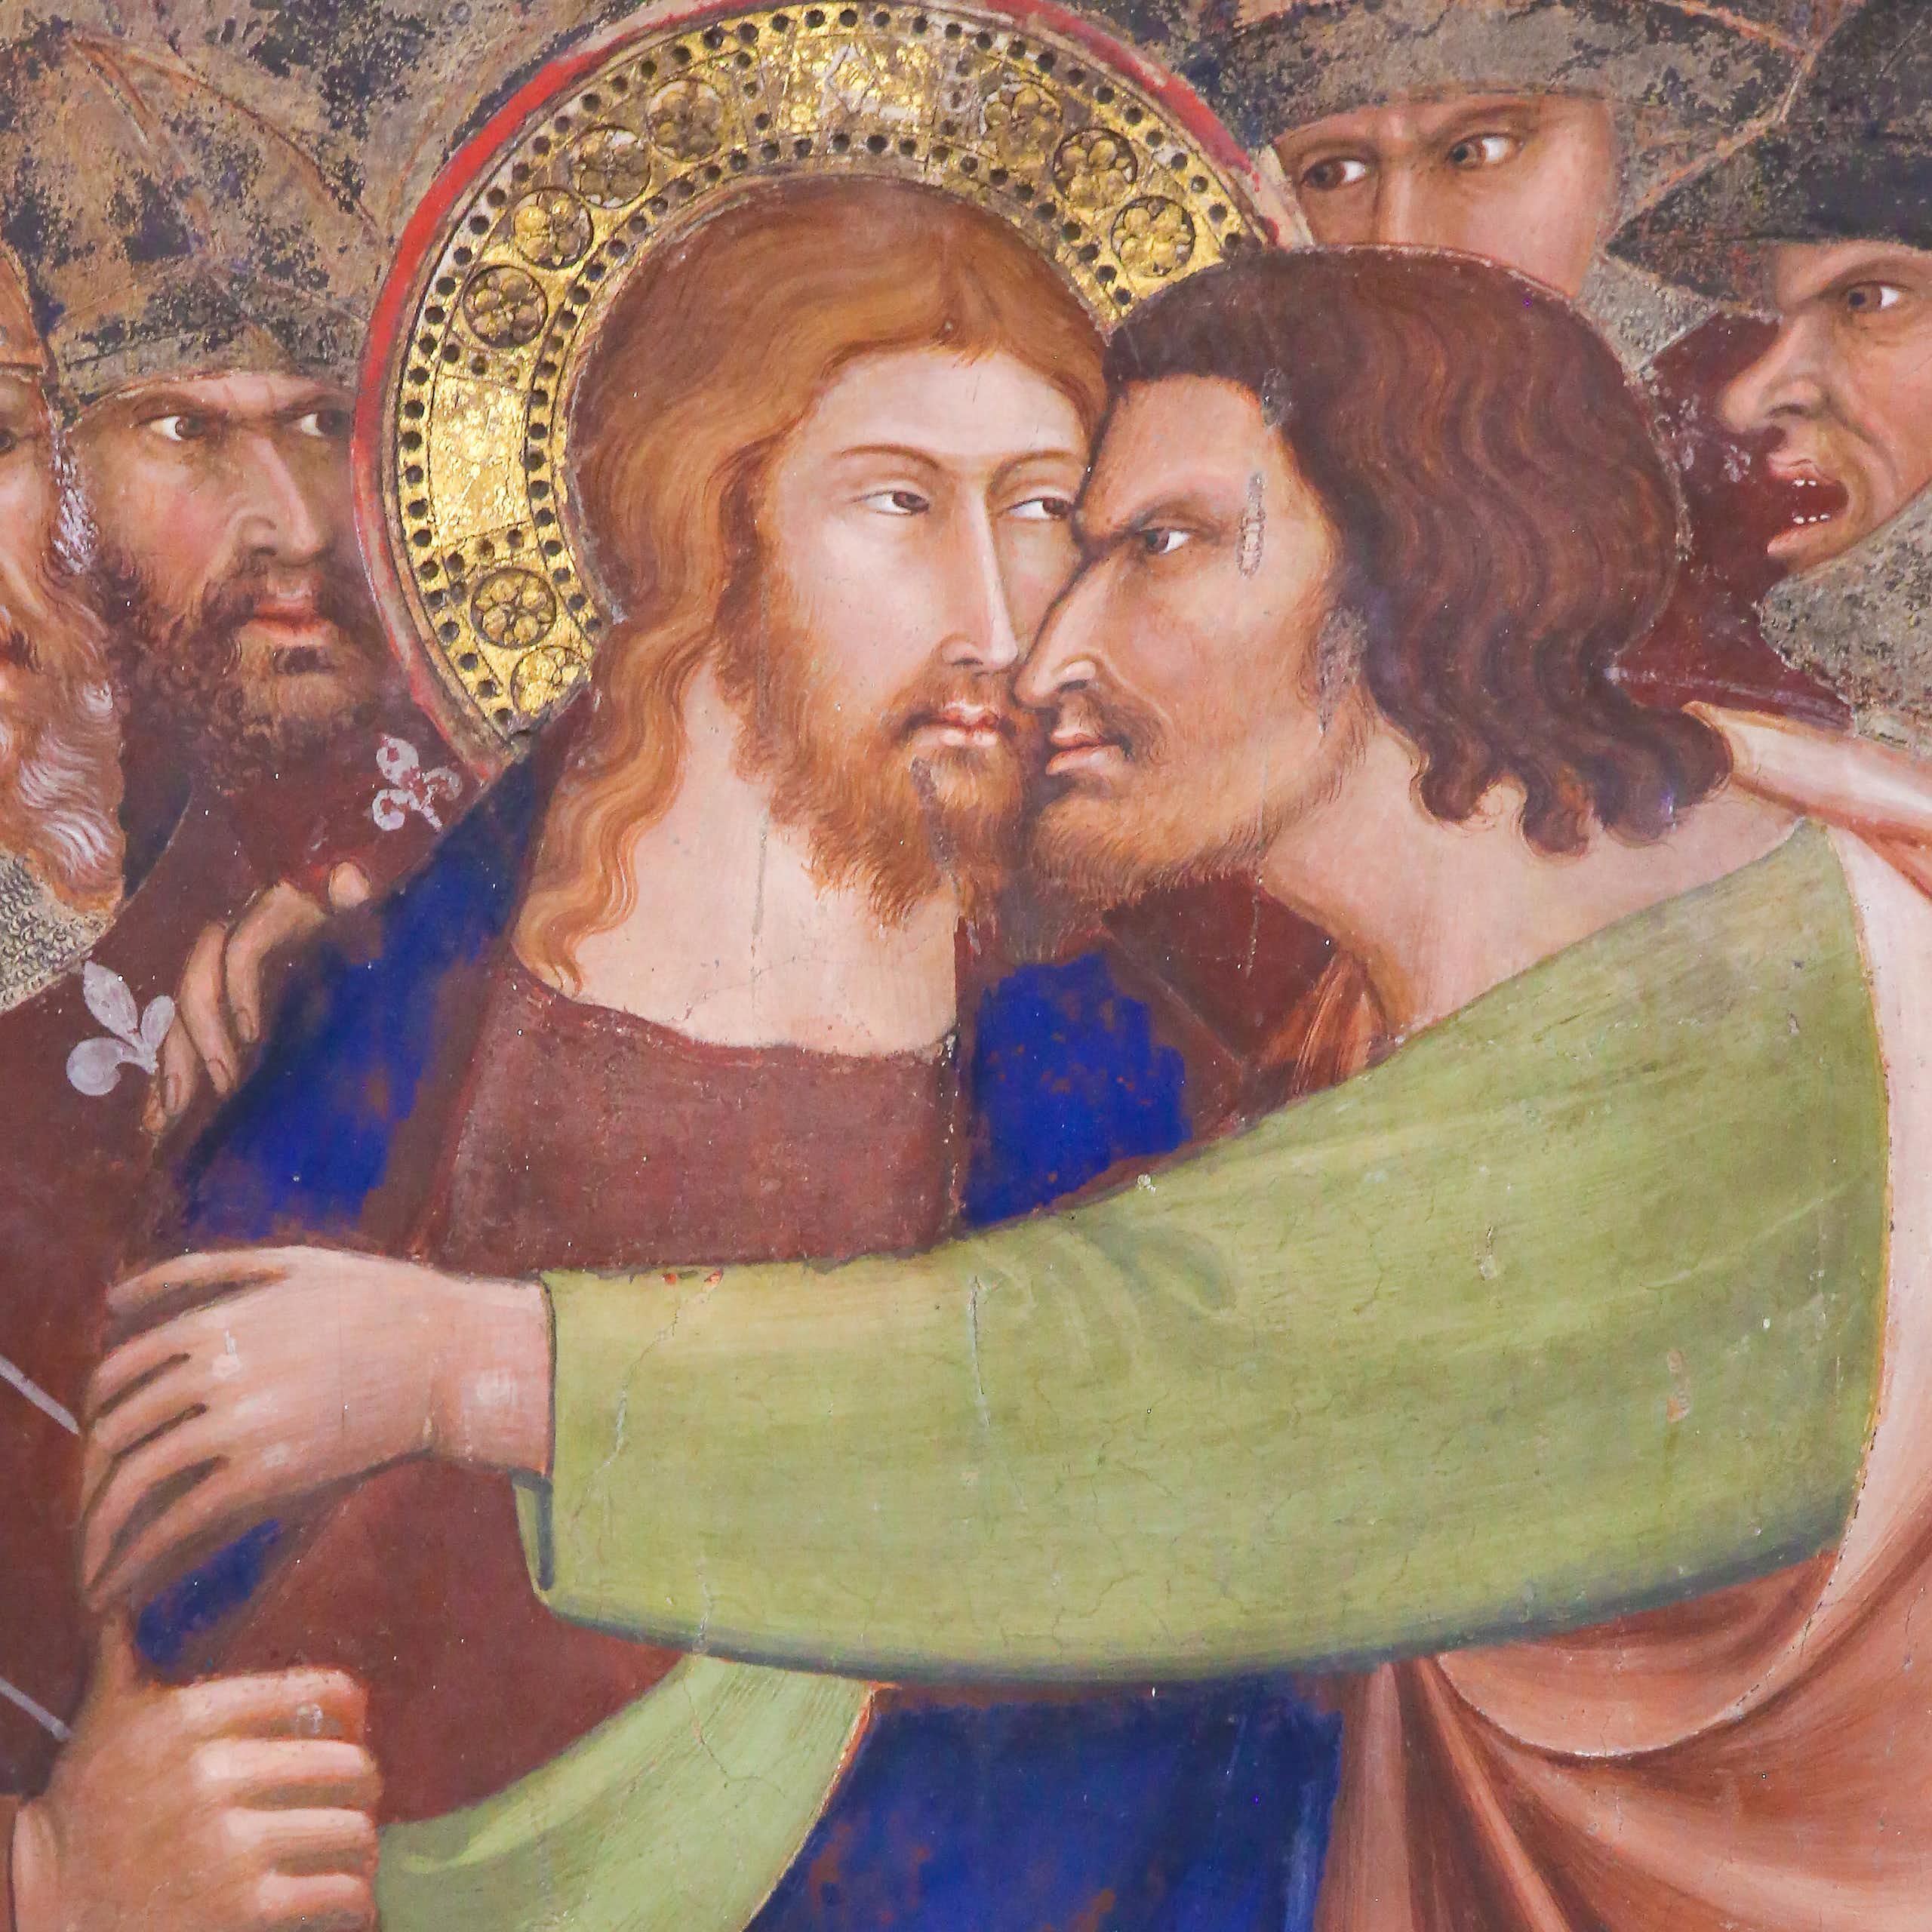 Detail from a fresco showing Judas betraying Jesus.